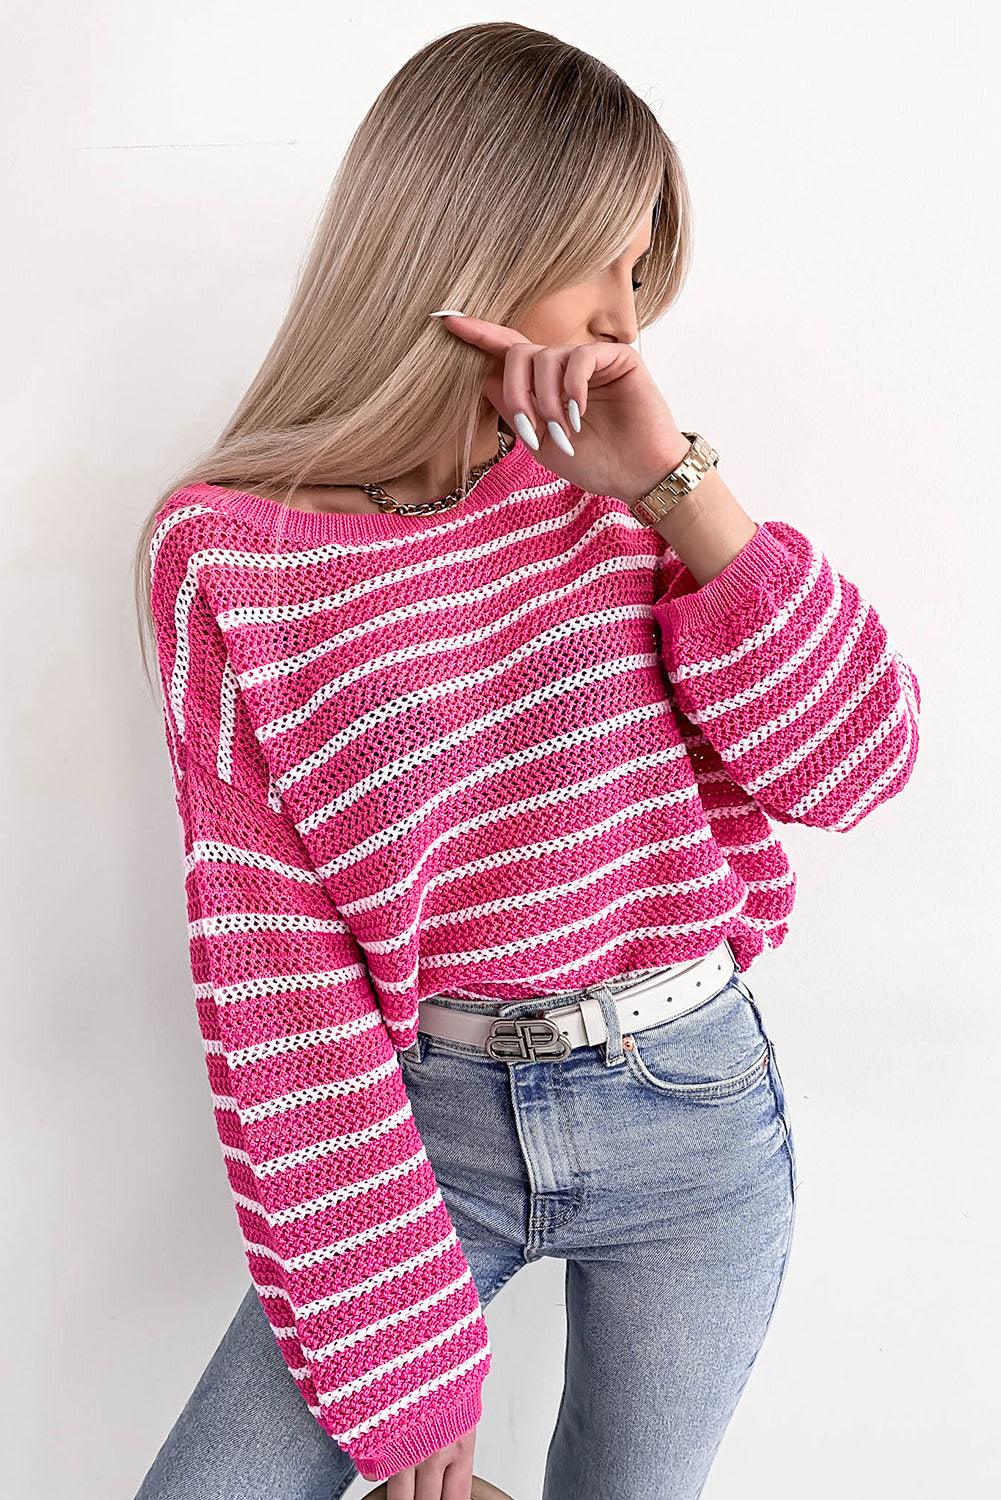 Rose Drop Shoulder Contrasting Striped Sweater - L & M Kee, LLC